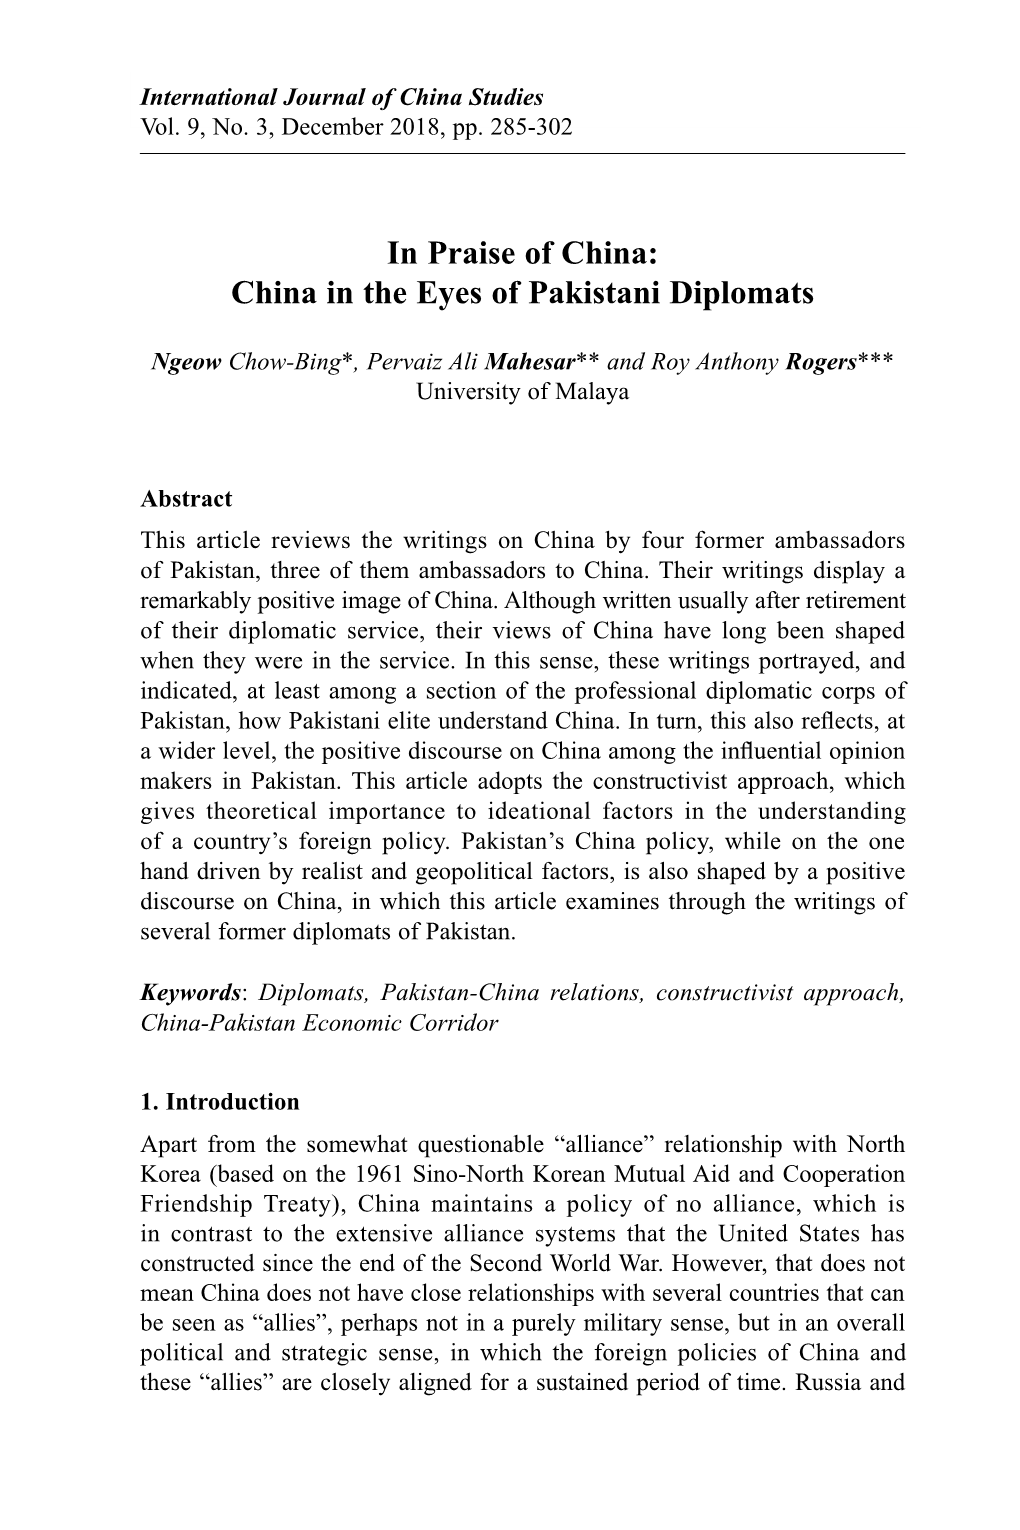 Views the Writings on China by Four Former Ambassadors of Pakistan, Three of Them Ambassadors to China